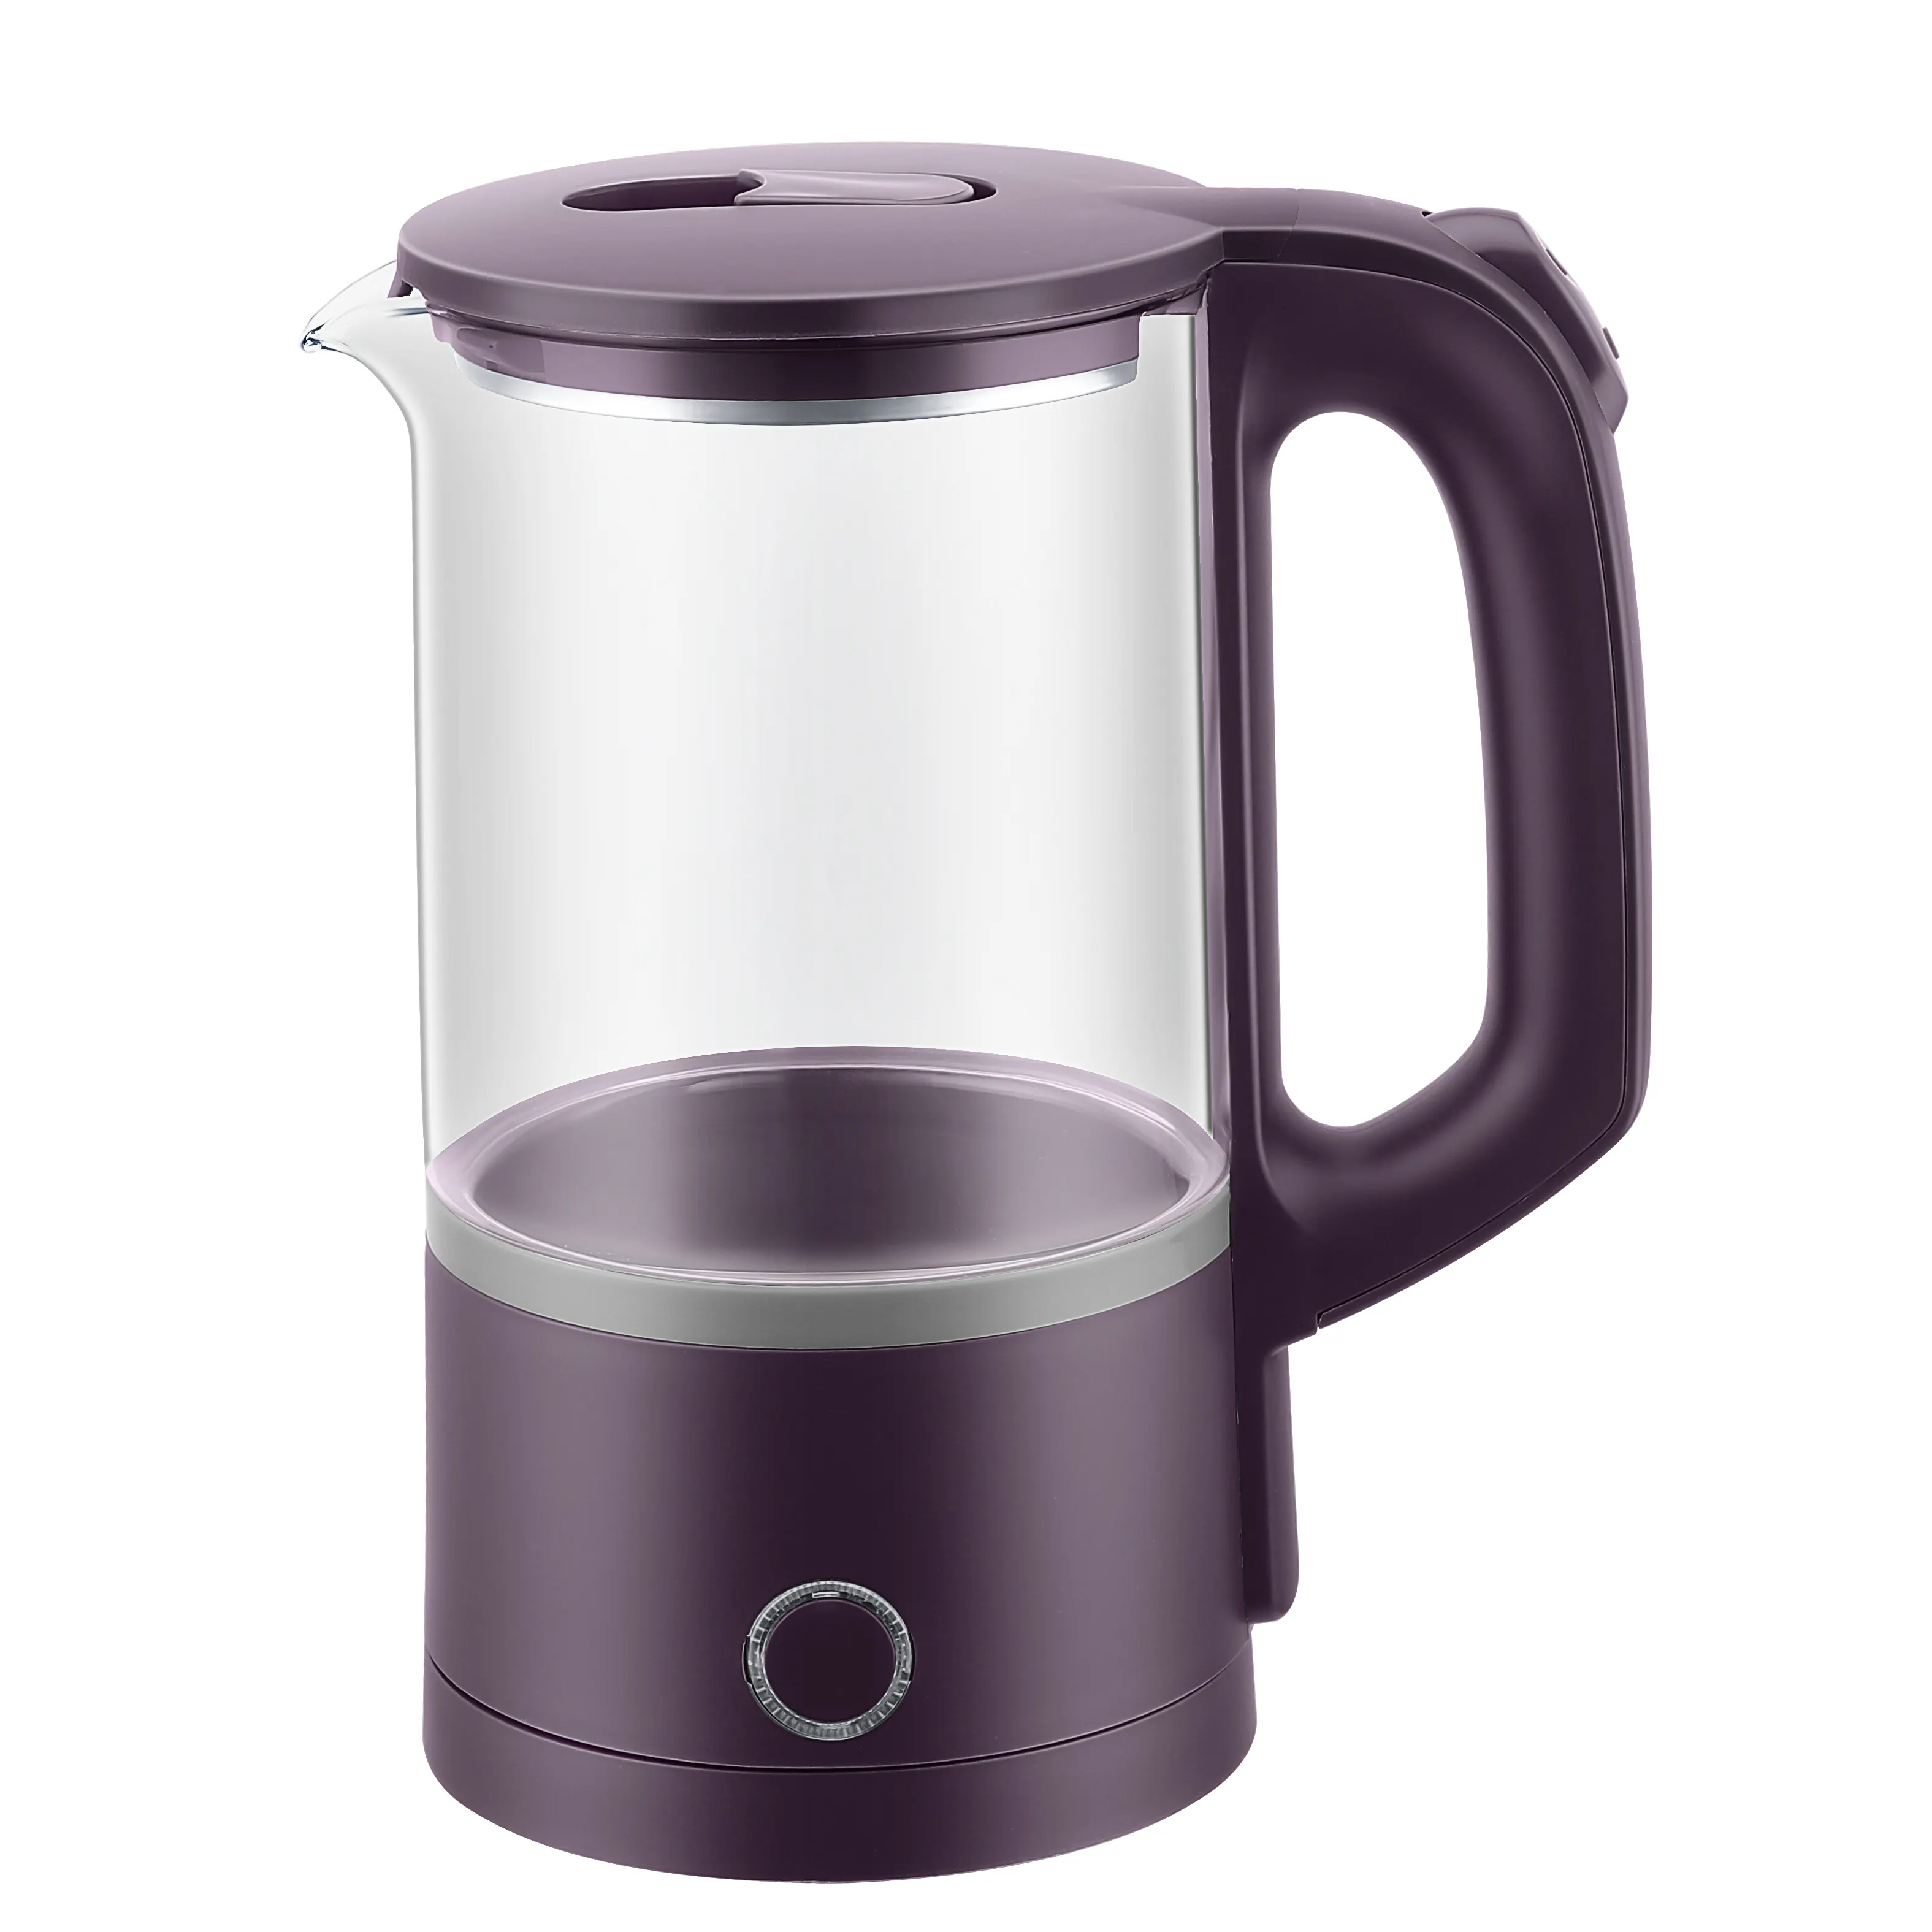 Small kitchen appliances 1.5L small portable tea jug travel electric glass kettle